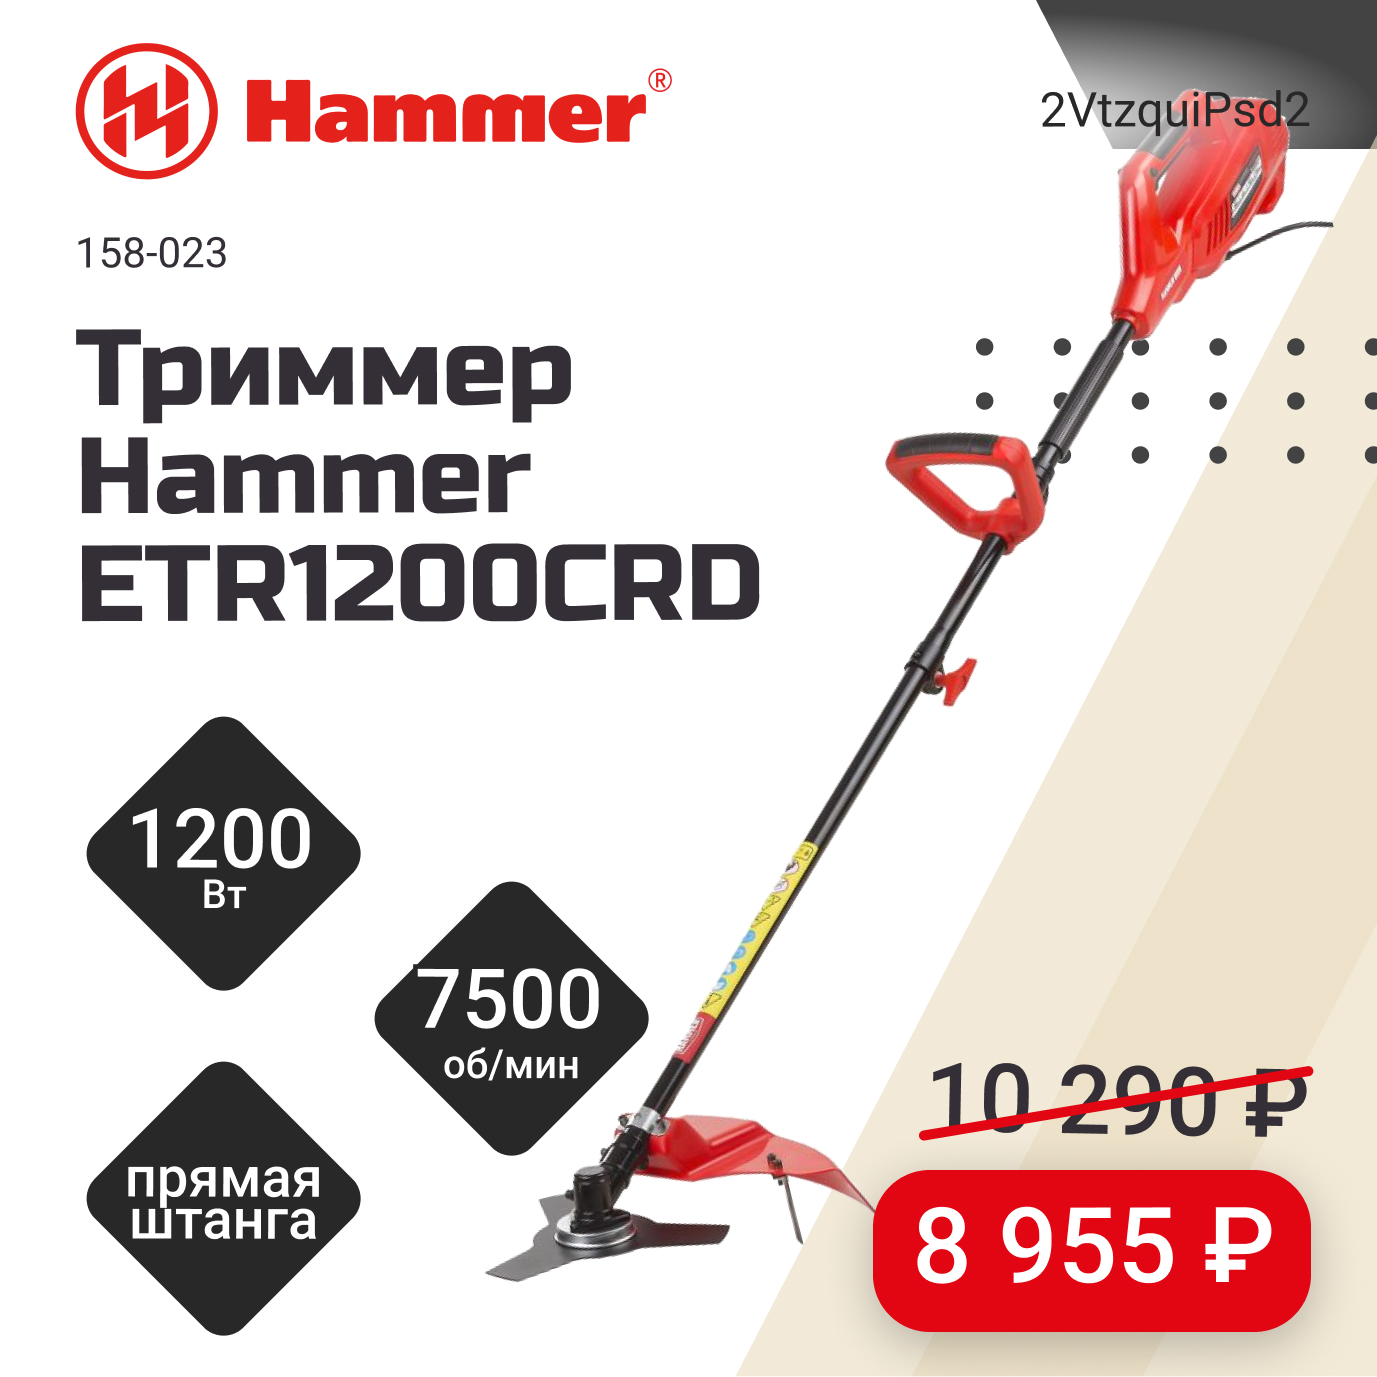 Триммер Hammer ETR1200CRD за 8 955 рублей!